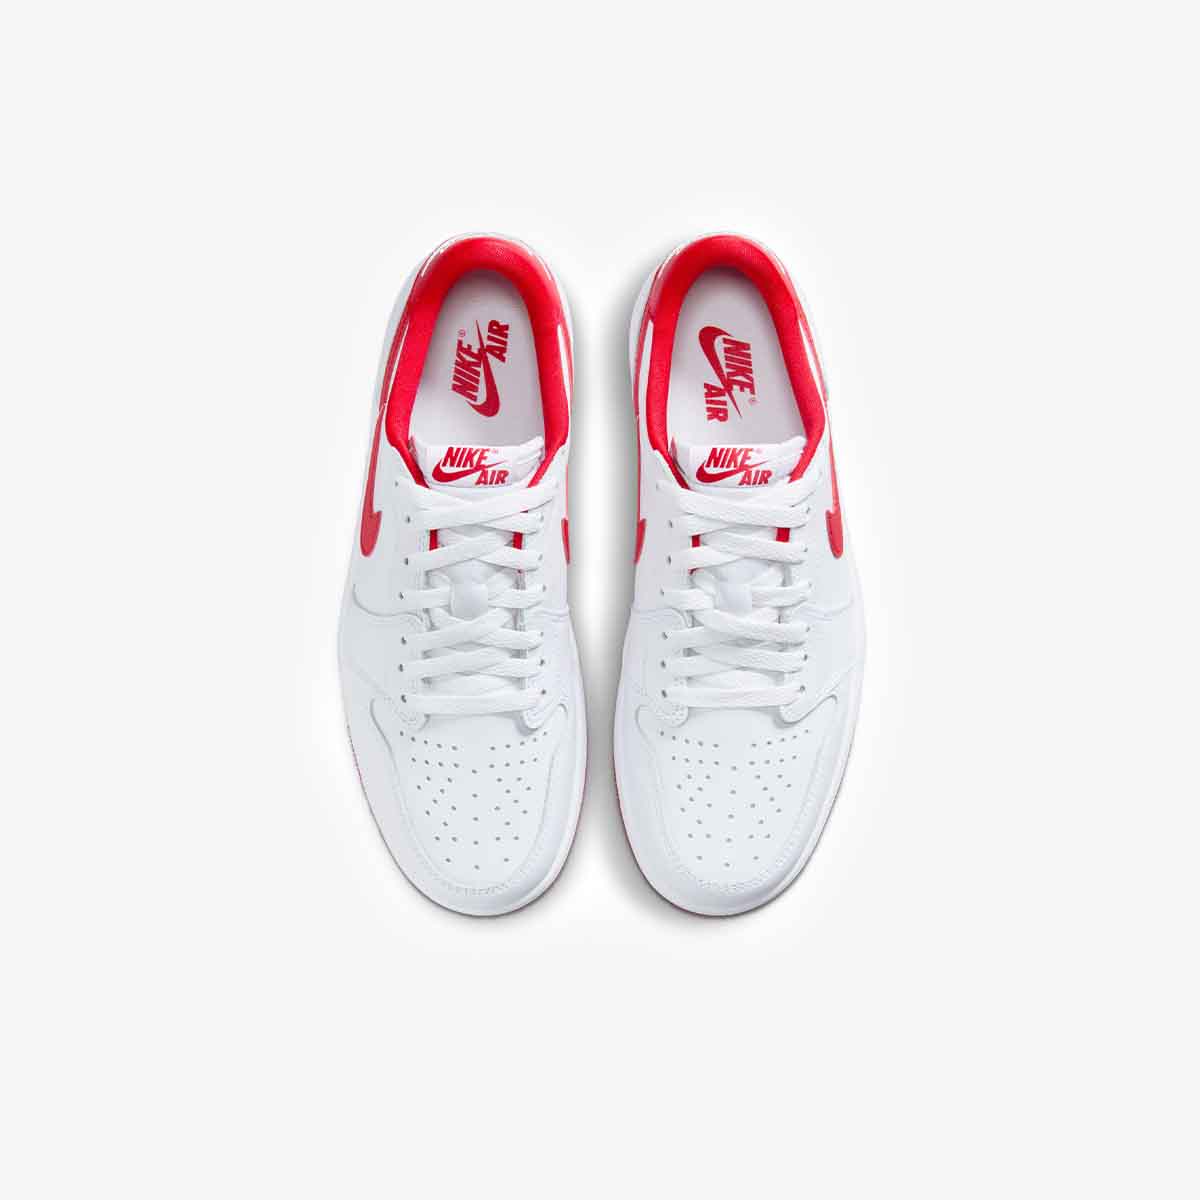 Air Jordan 1 Low OG (University Red & White) | END. Launches